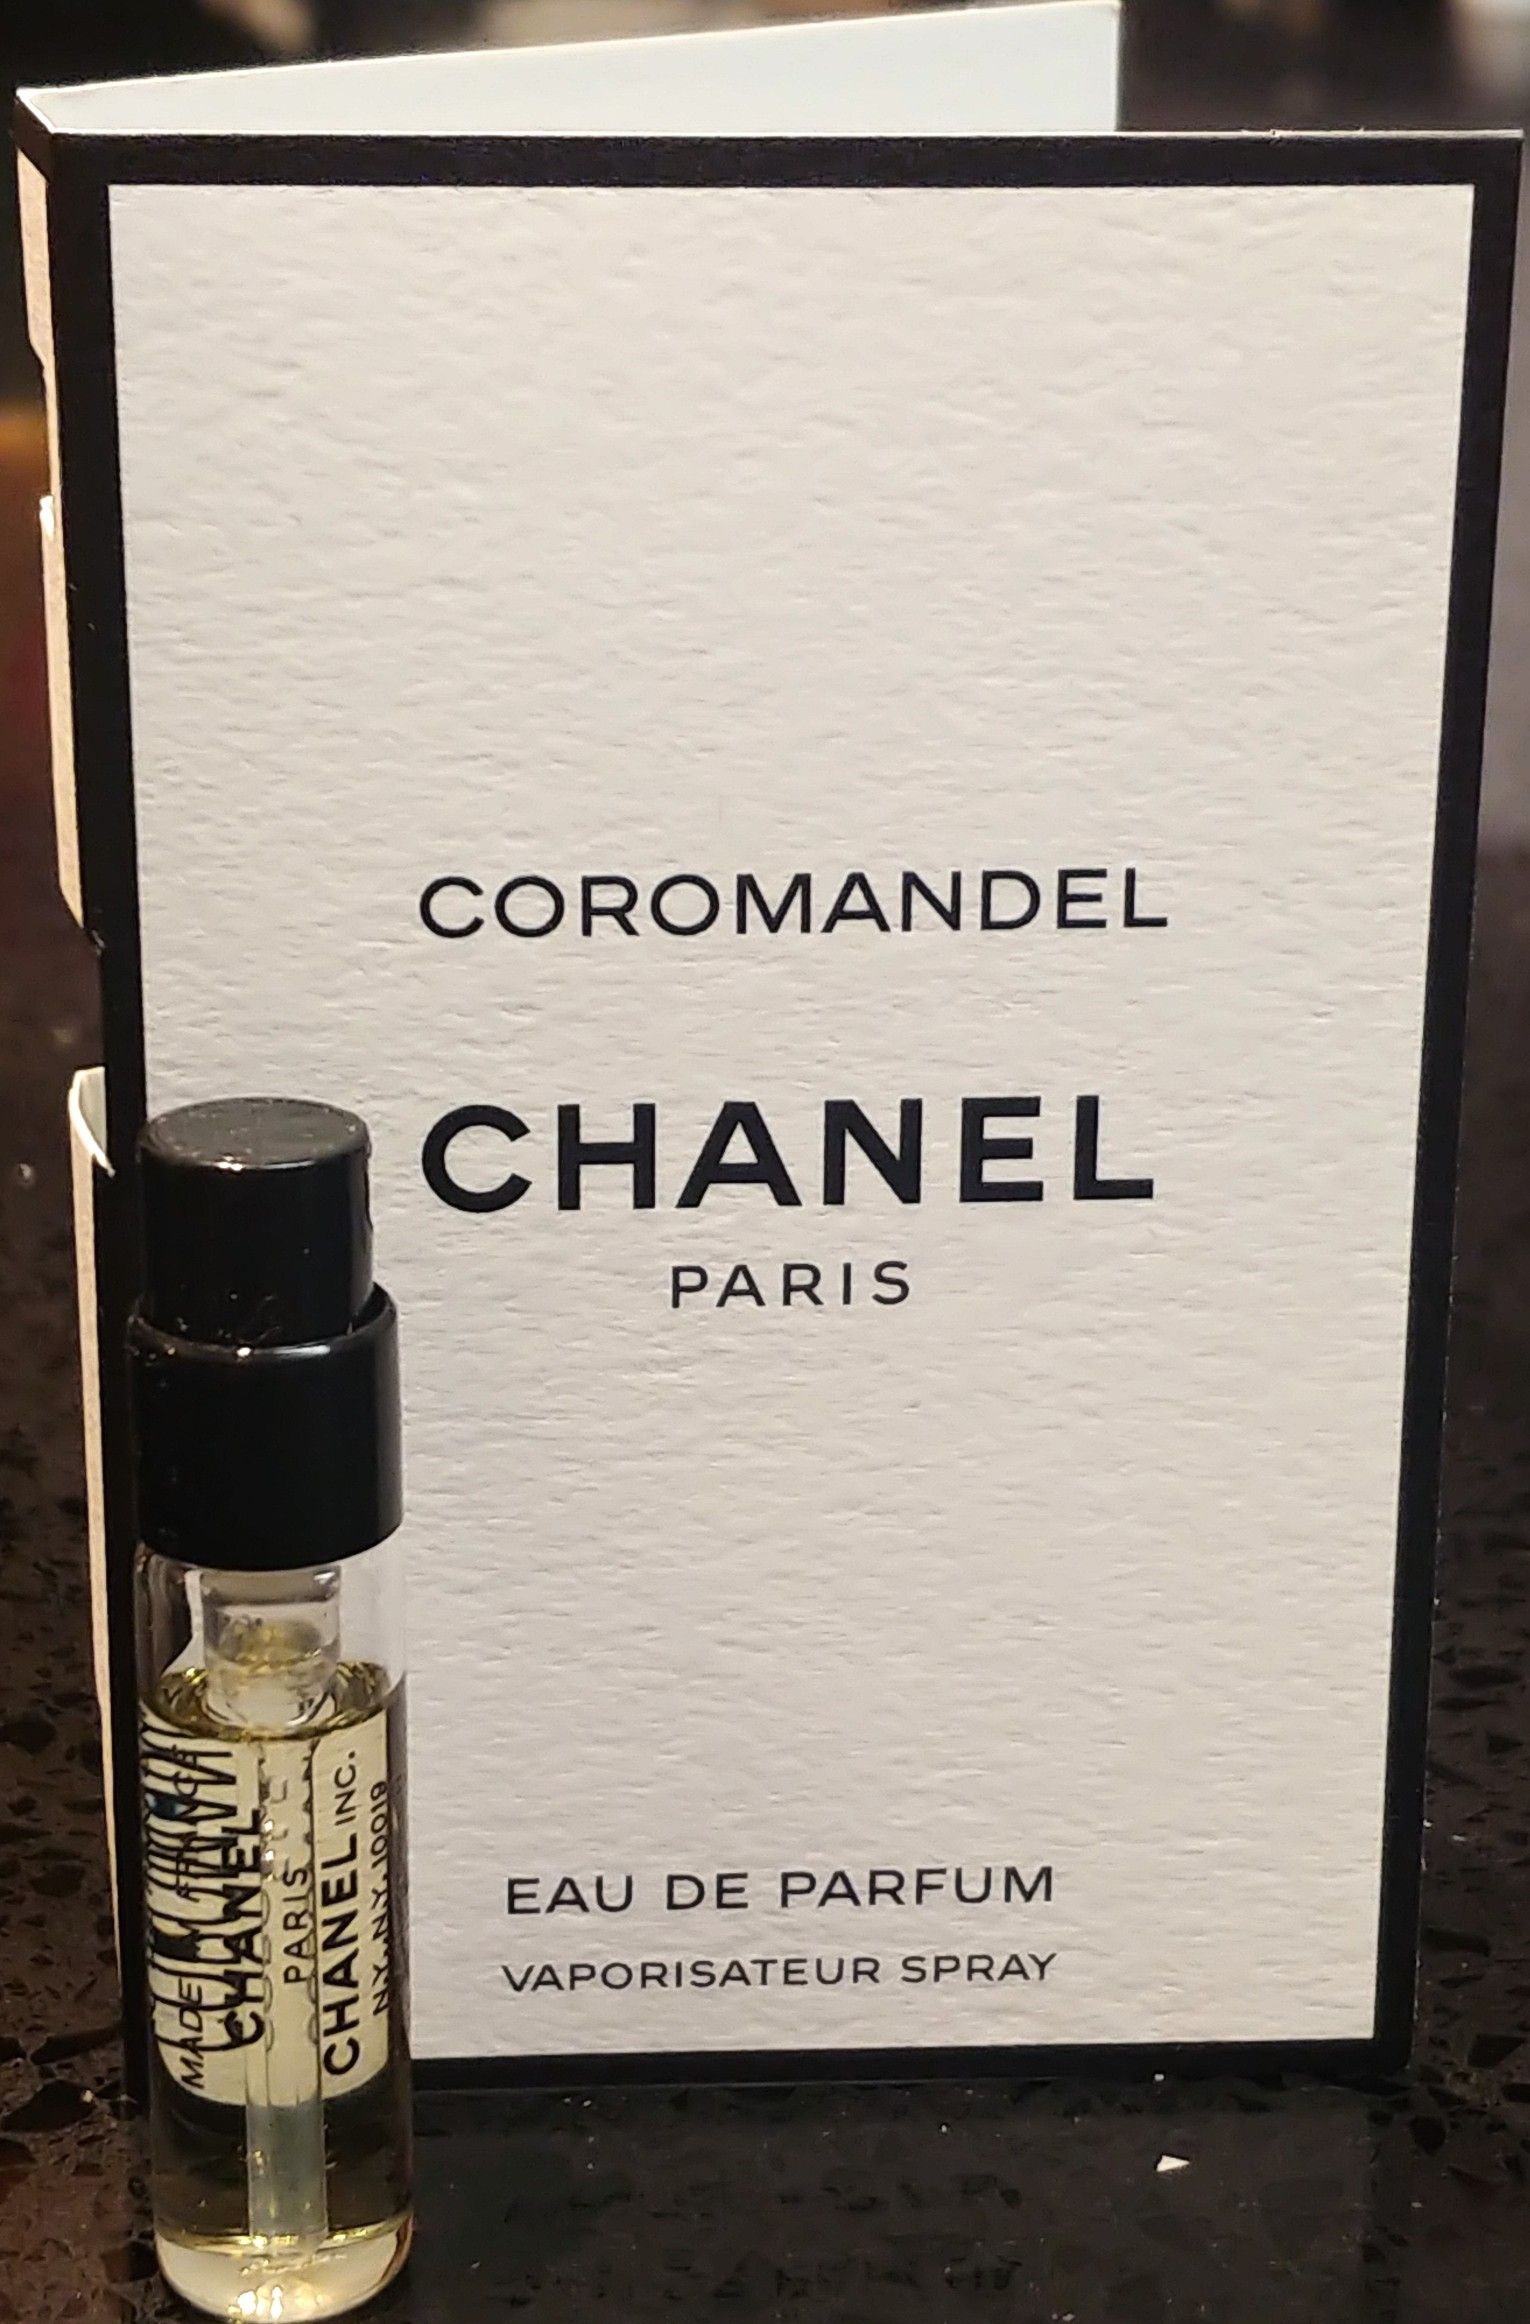 12 NEW Chanel Coromandel perfume EDP eau de parfume sample spray bottles